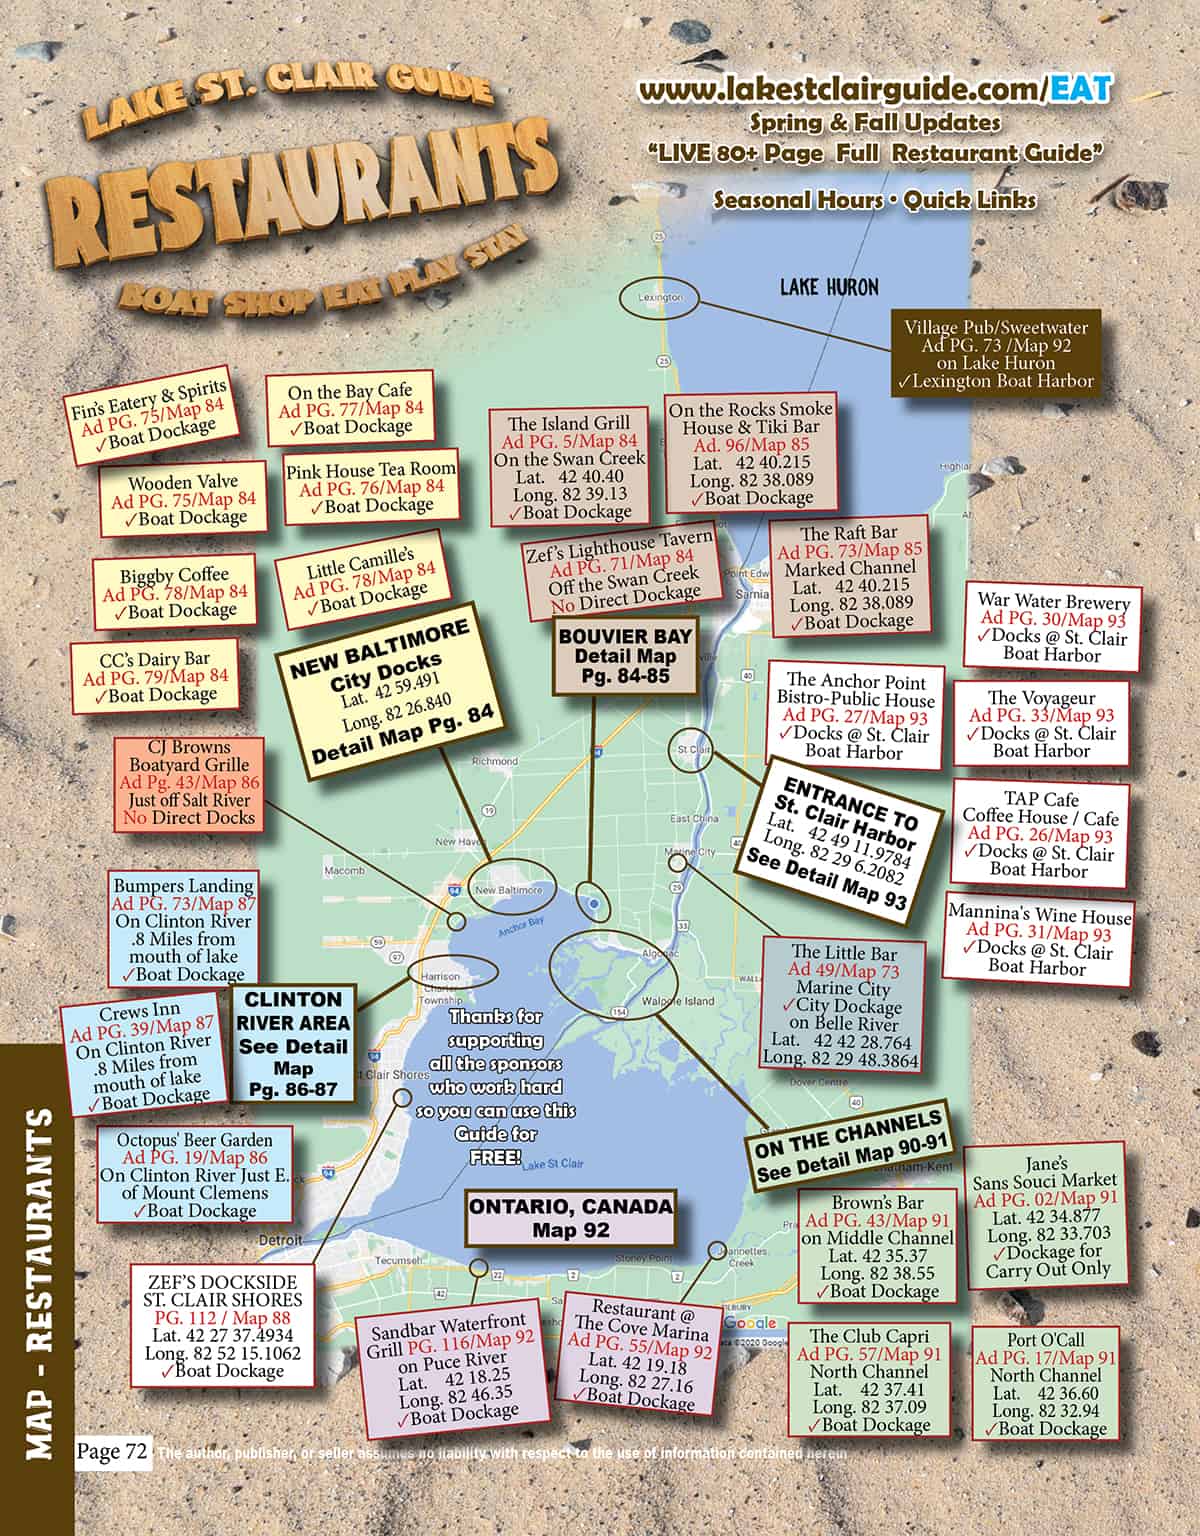 map of lake st. clair restaurants